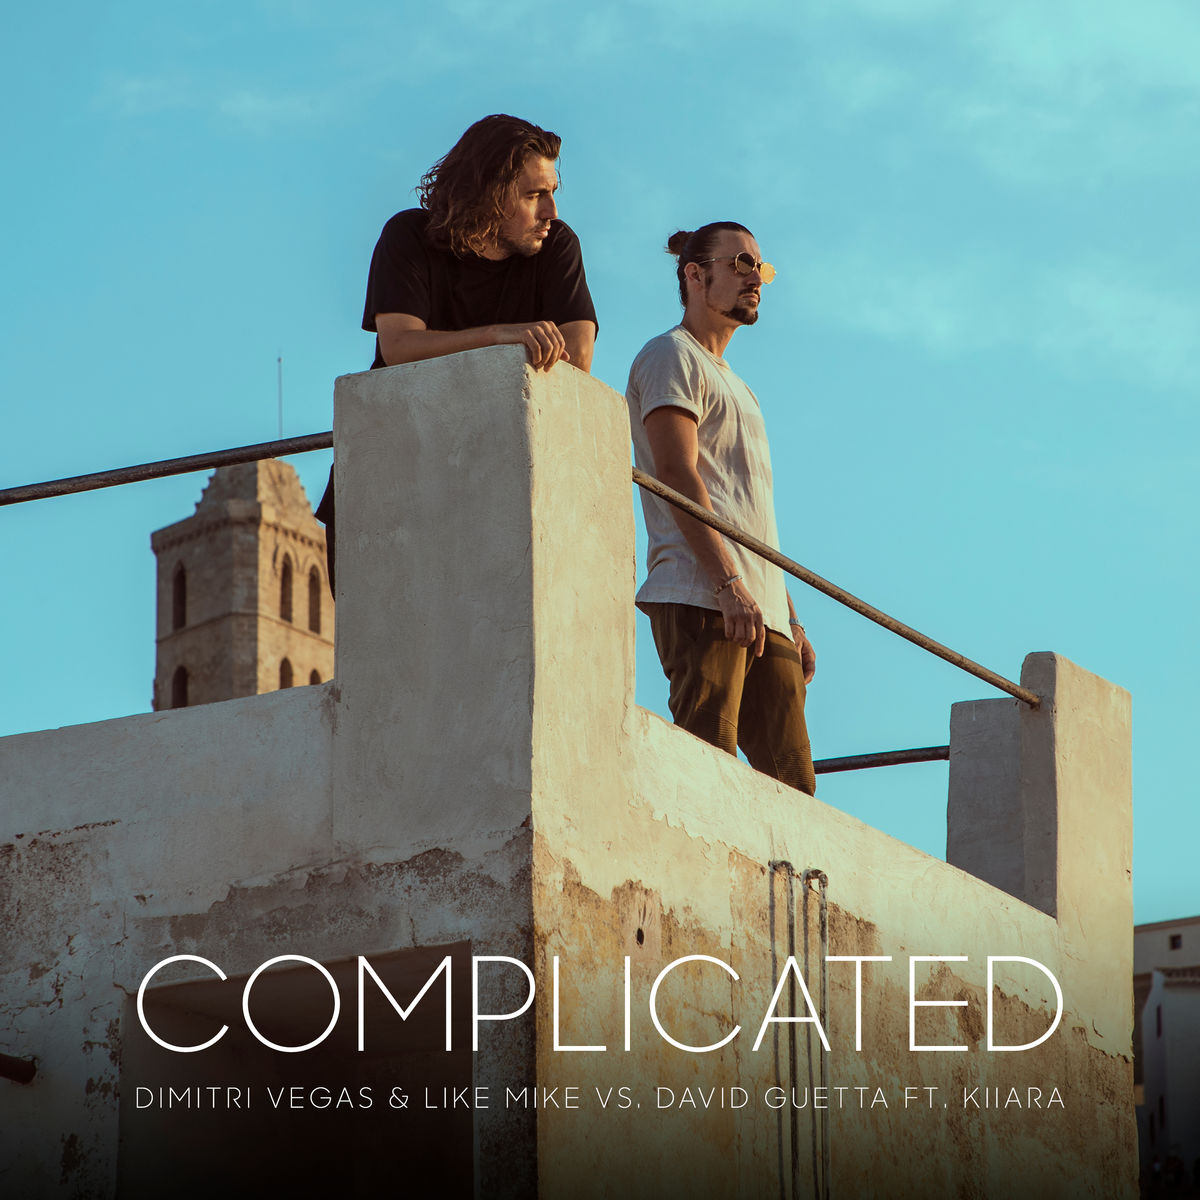 DIMITRI VEGAS & LIKE MIKE–"Complicated"